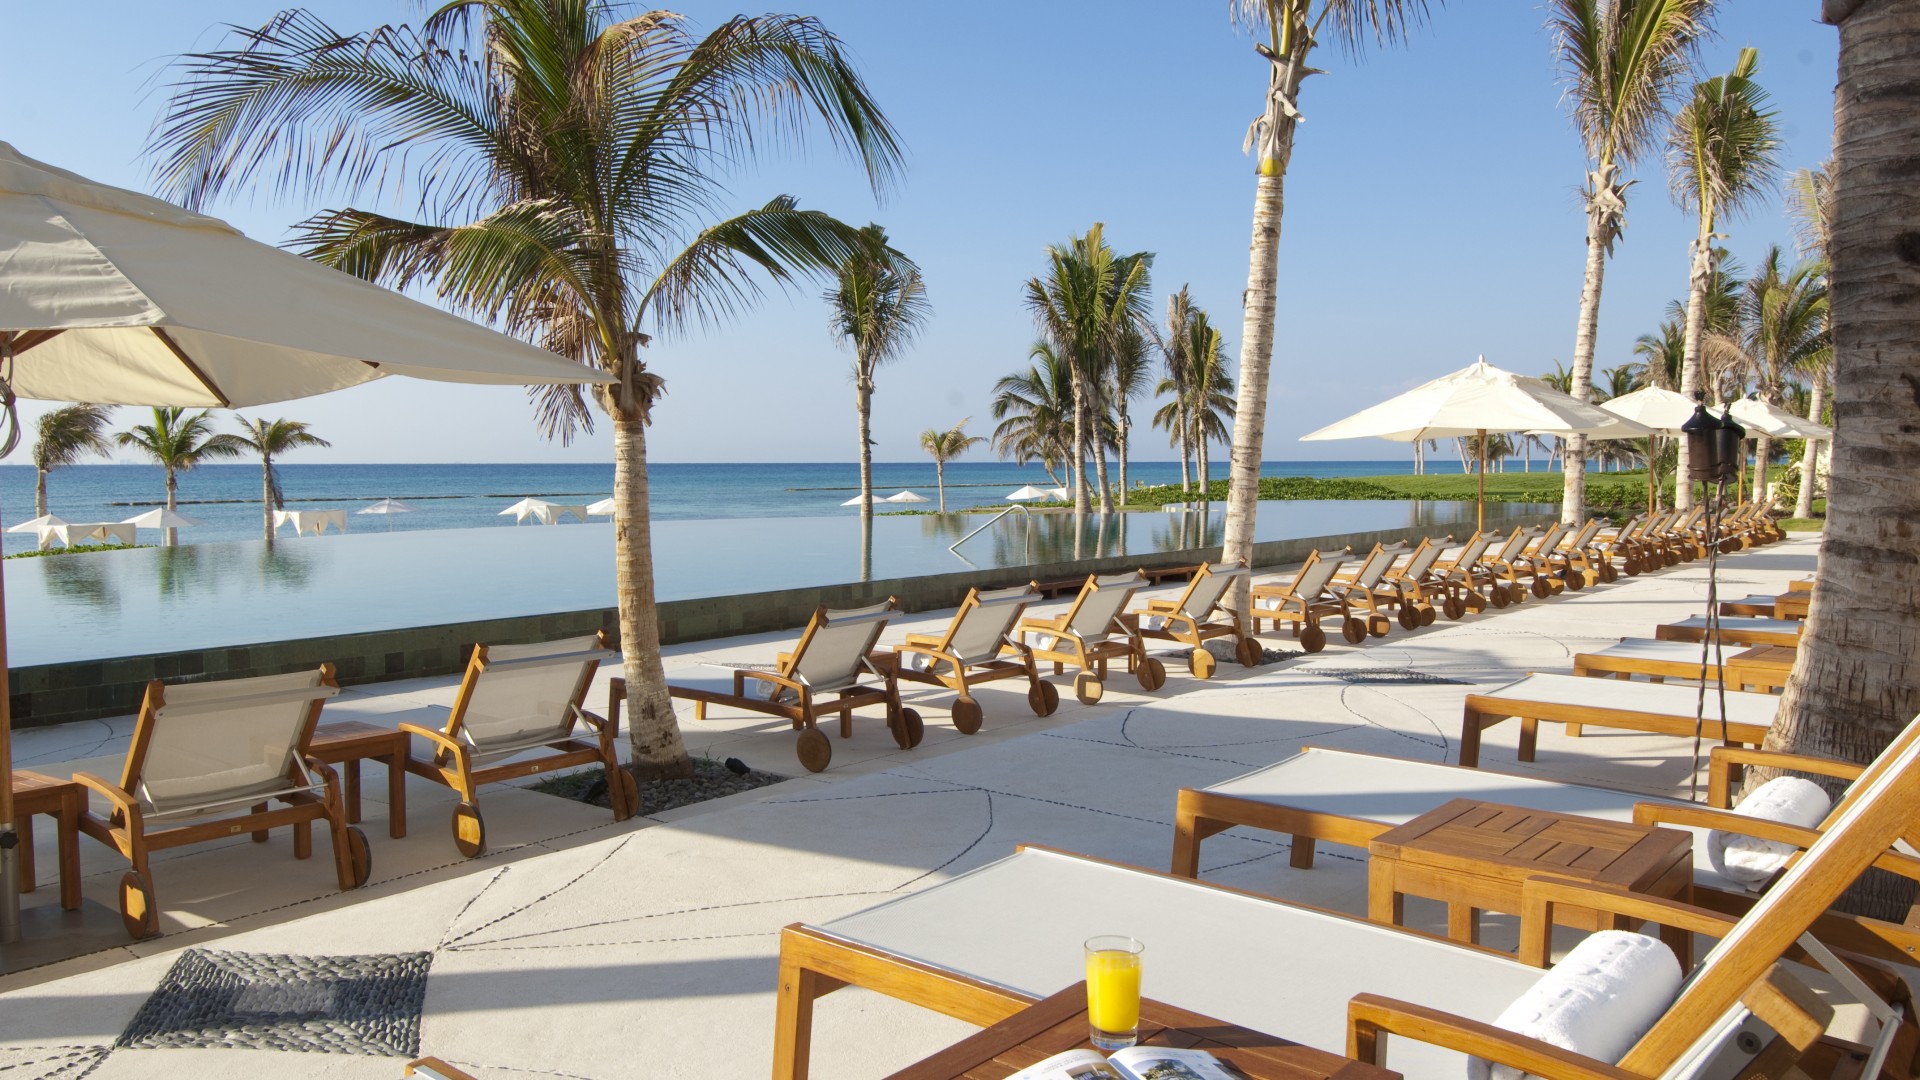 Grand Velas Riviera Maya, Mexico, Best Hotels of 2017, tourism, travel, resort, vacation, palms, sunbed (horizontal)